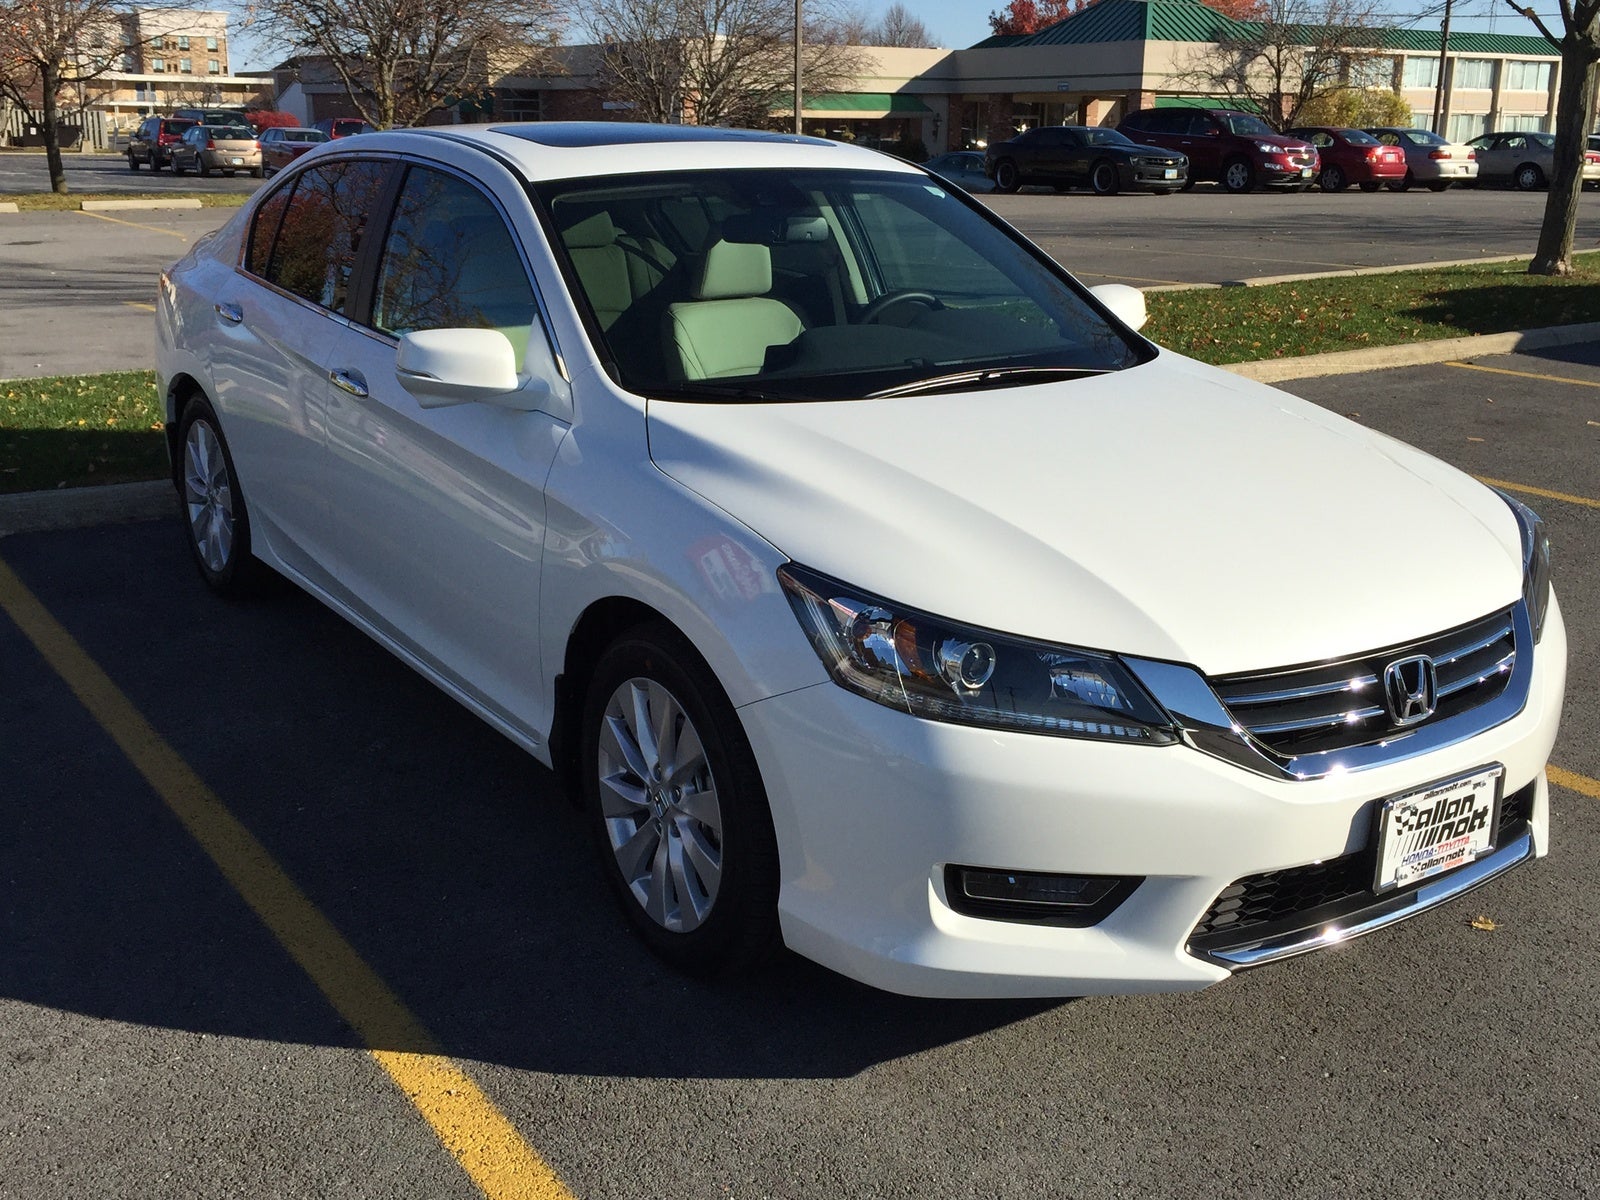 New 2015 Honda Accord For Sale - CarGurus